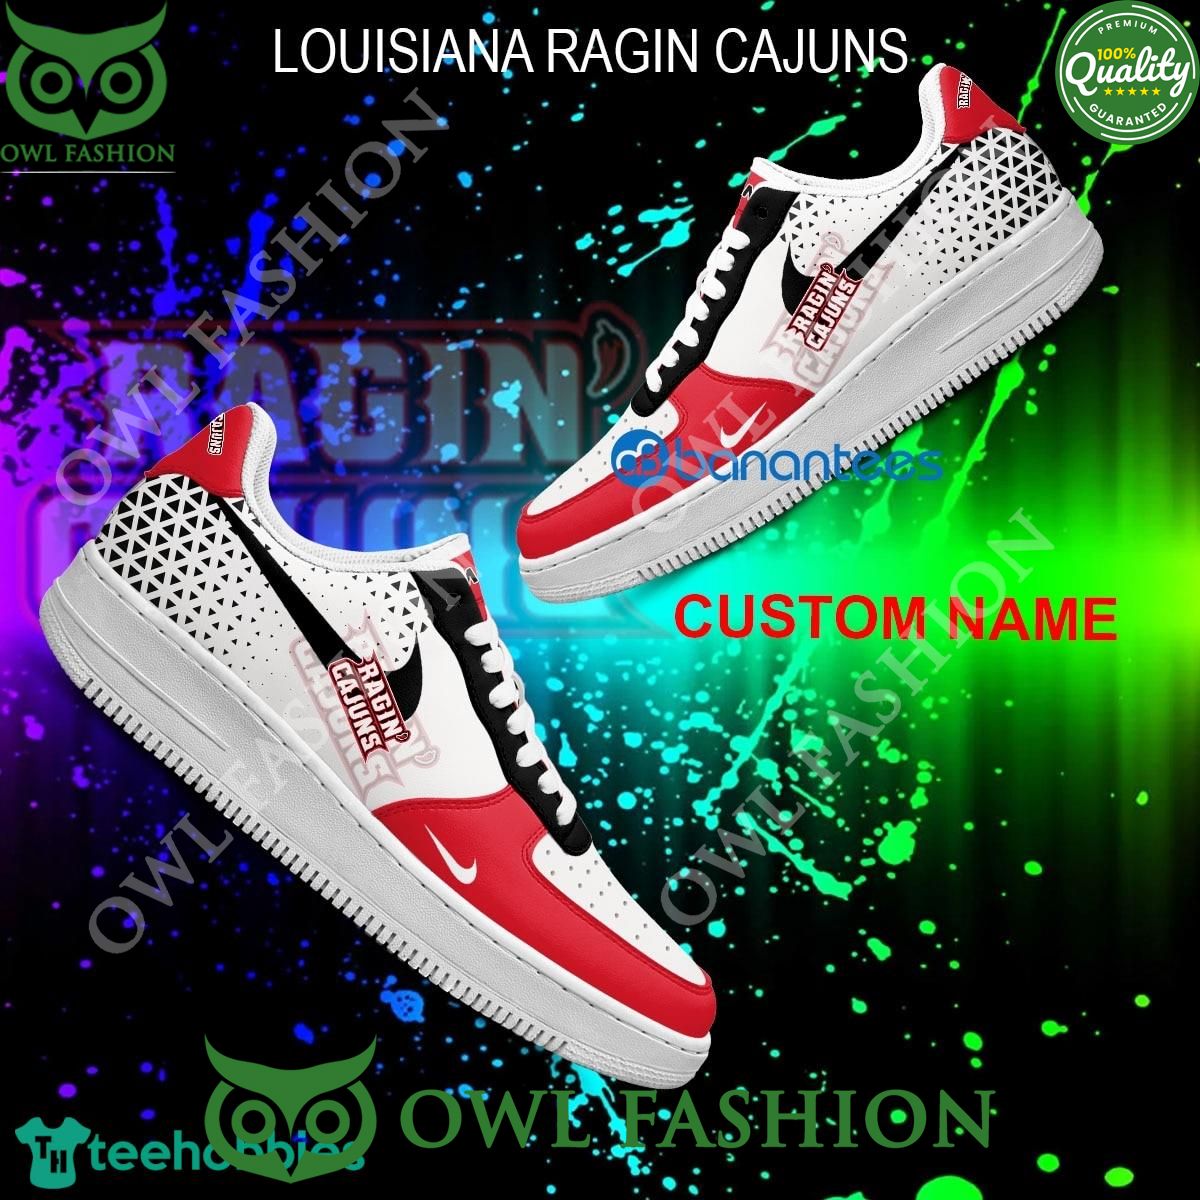 Custom Name Louisiana Ragin Cajuns NCAA Air Force 1 Shoes Coolosm